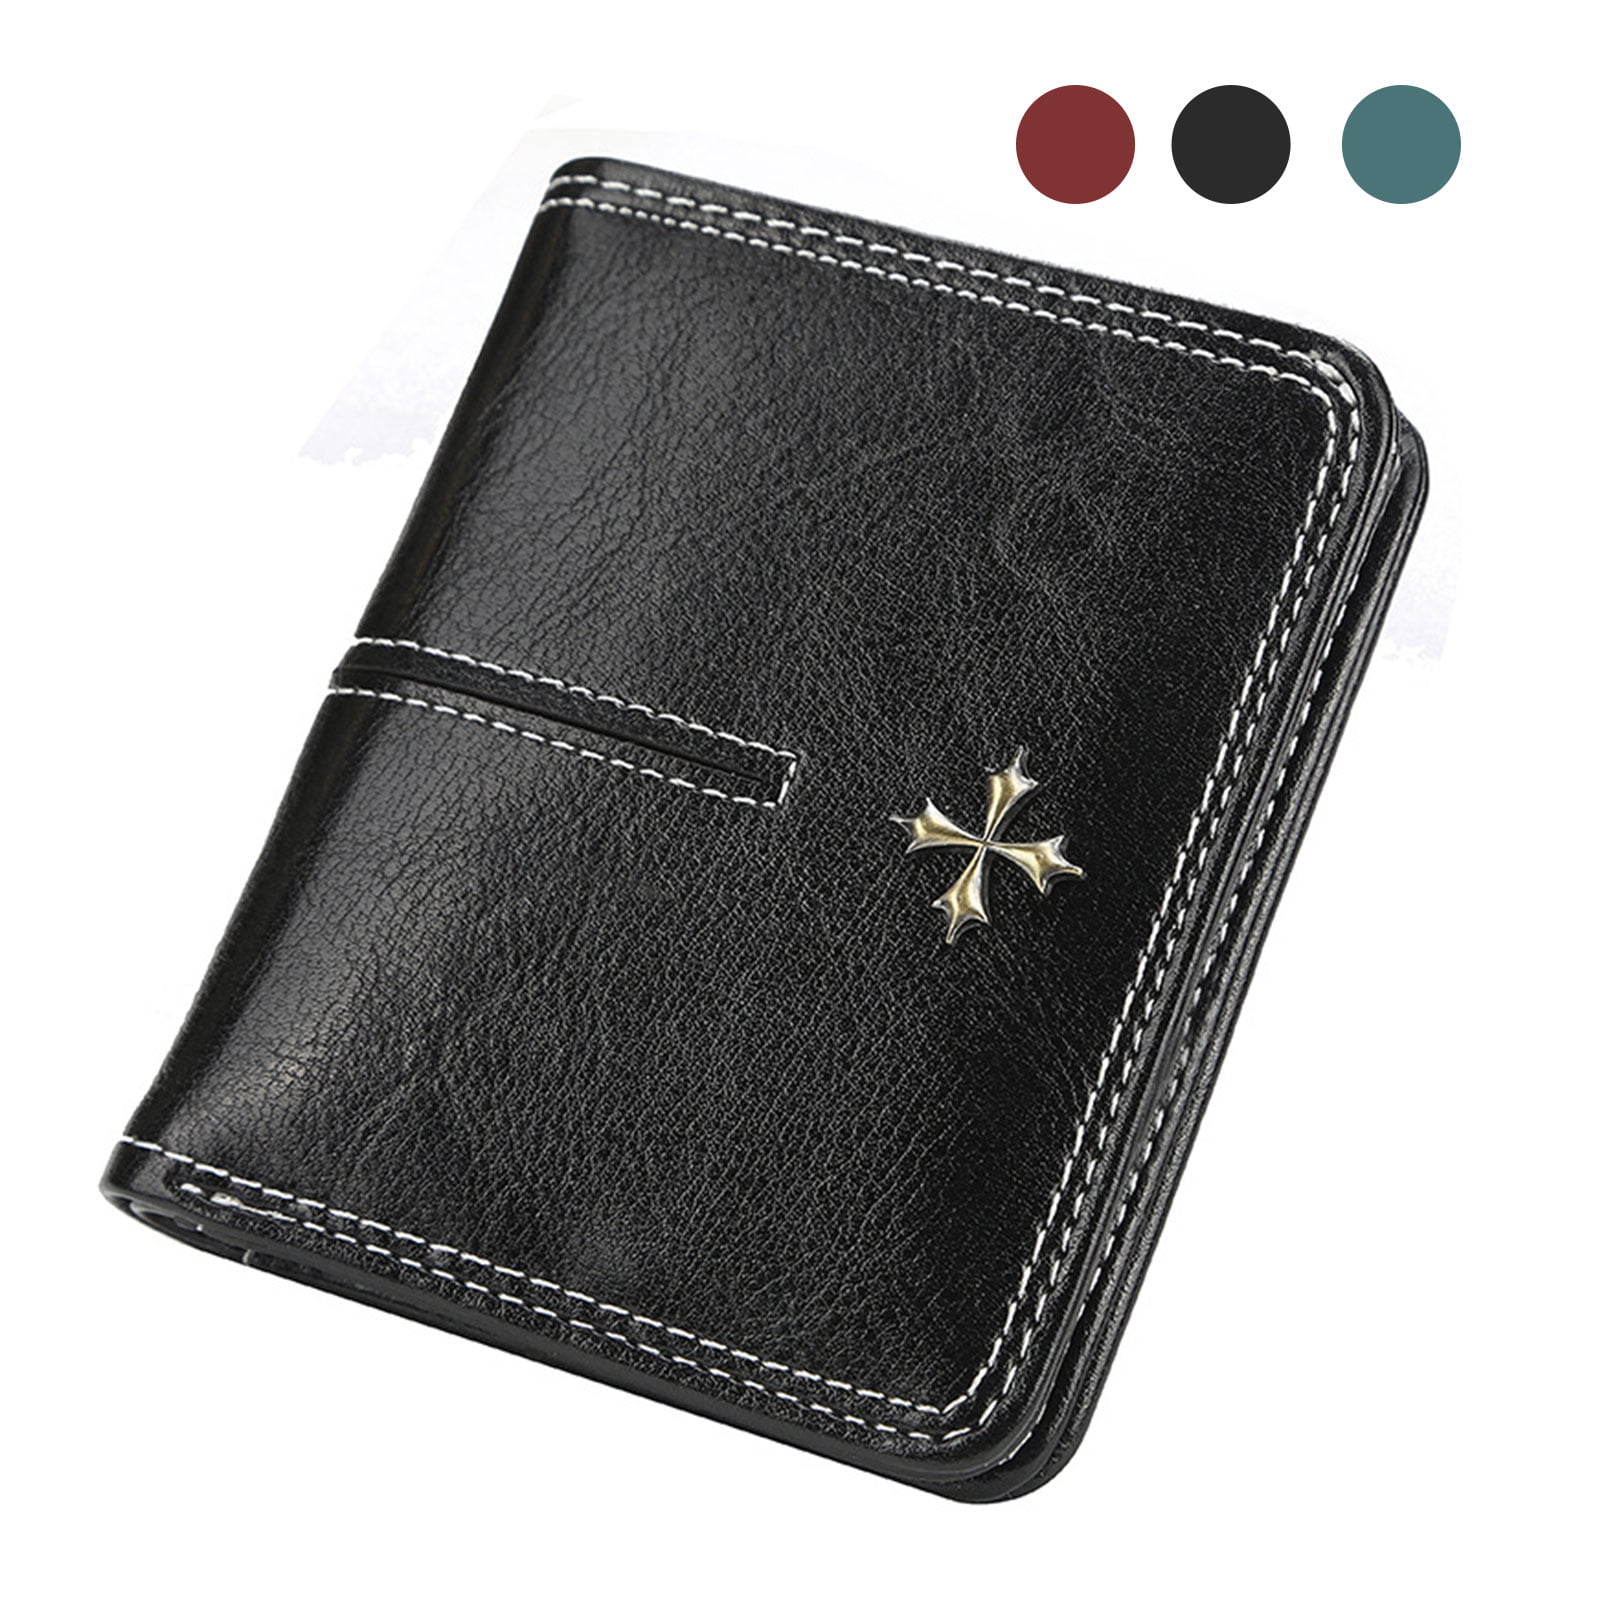 Women RFID Blocking Wallet Genuine Leather Short Wallet Ladies Purses Small Wallet Card Holder Zipper Coin Pocket black 